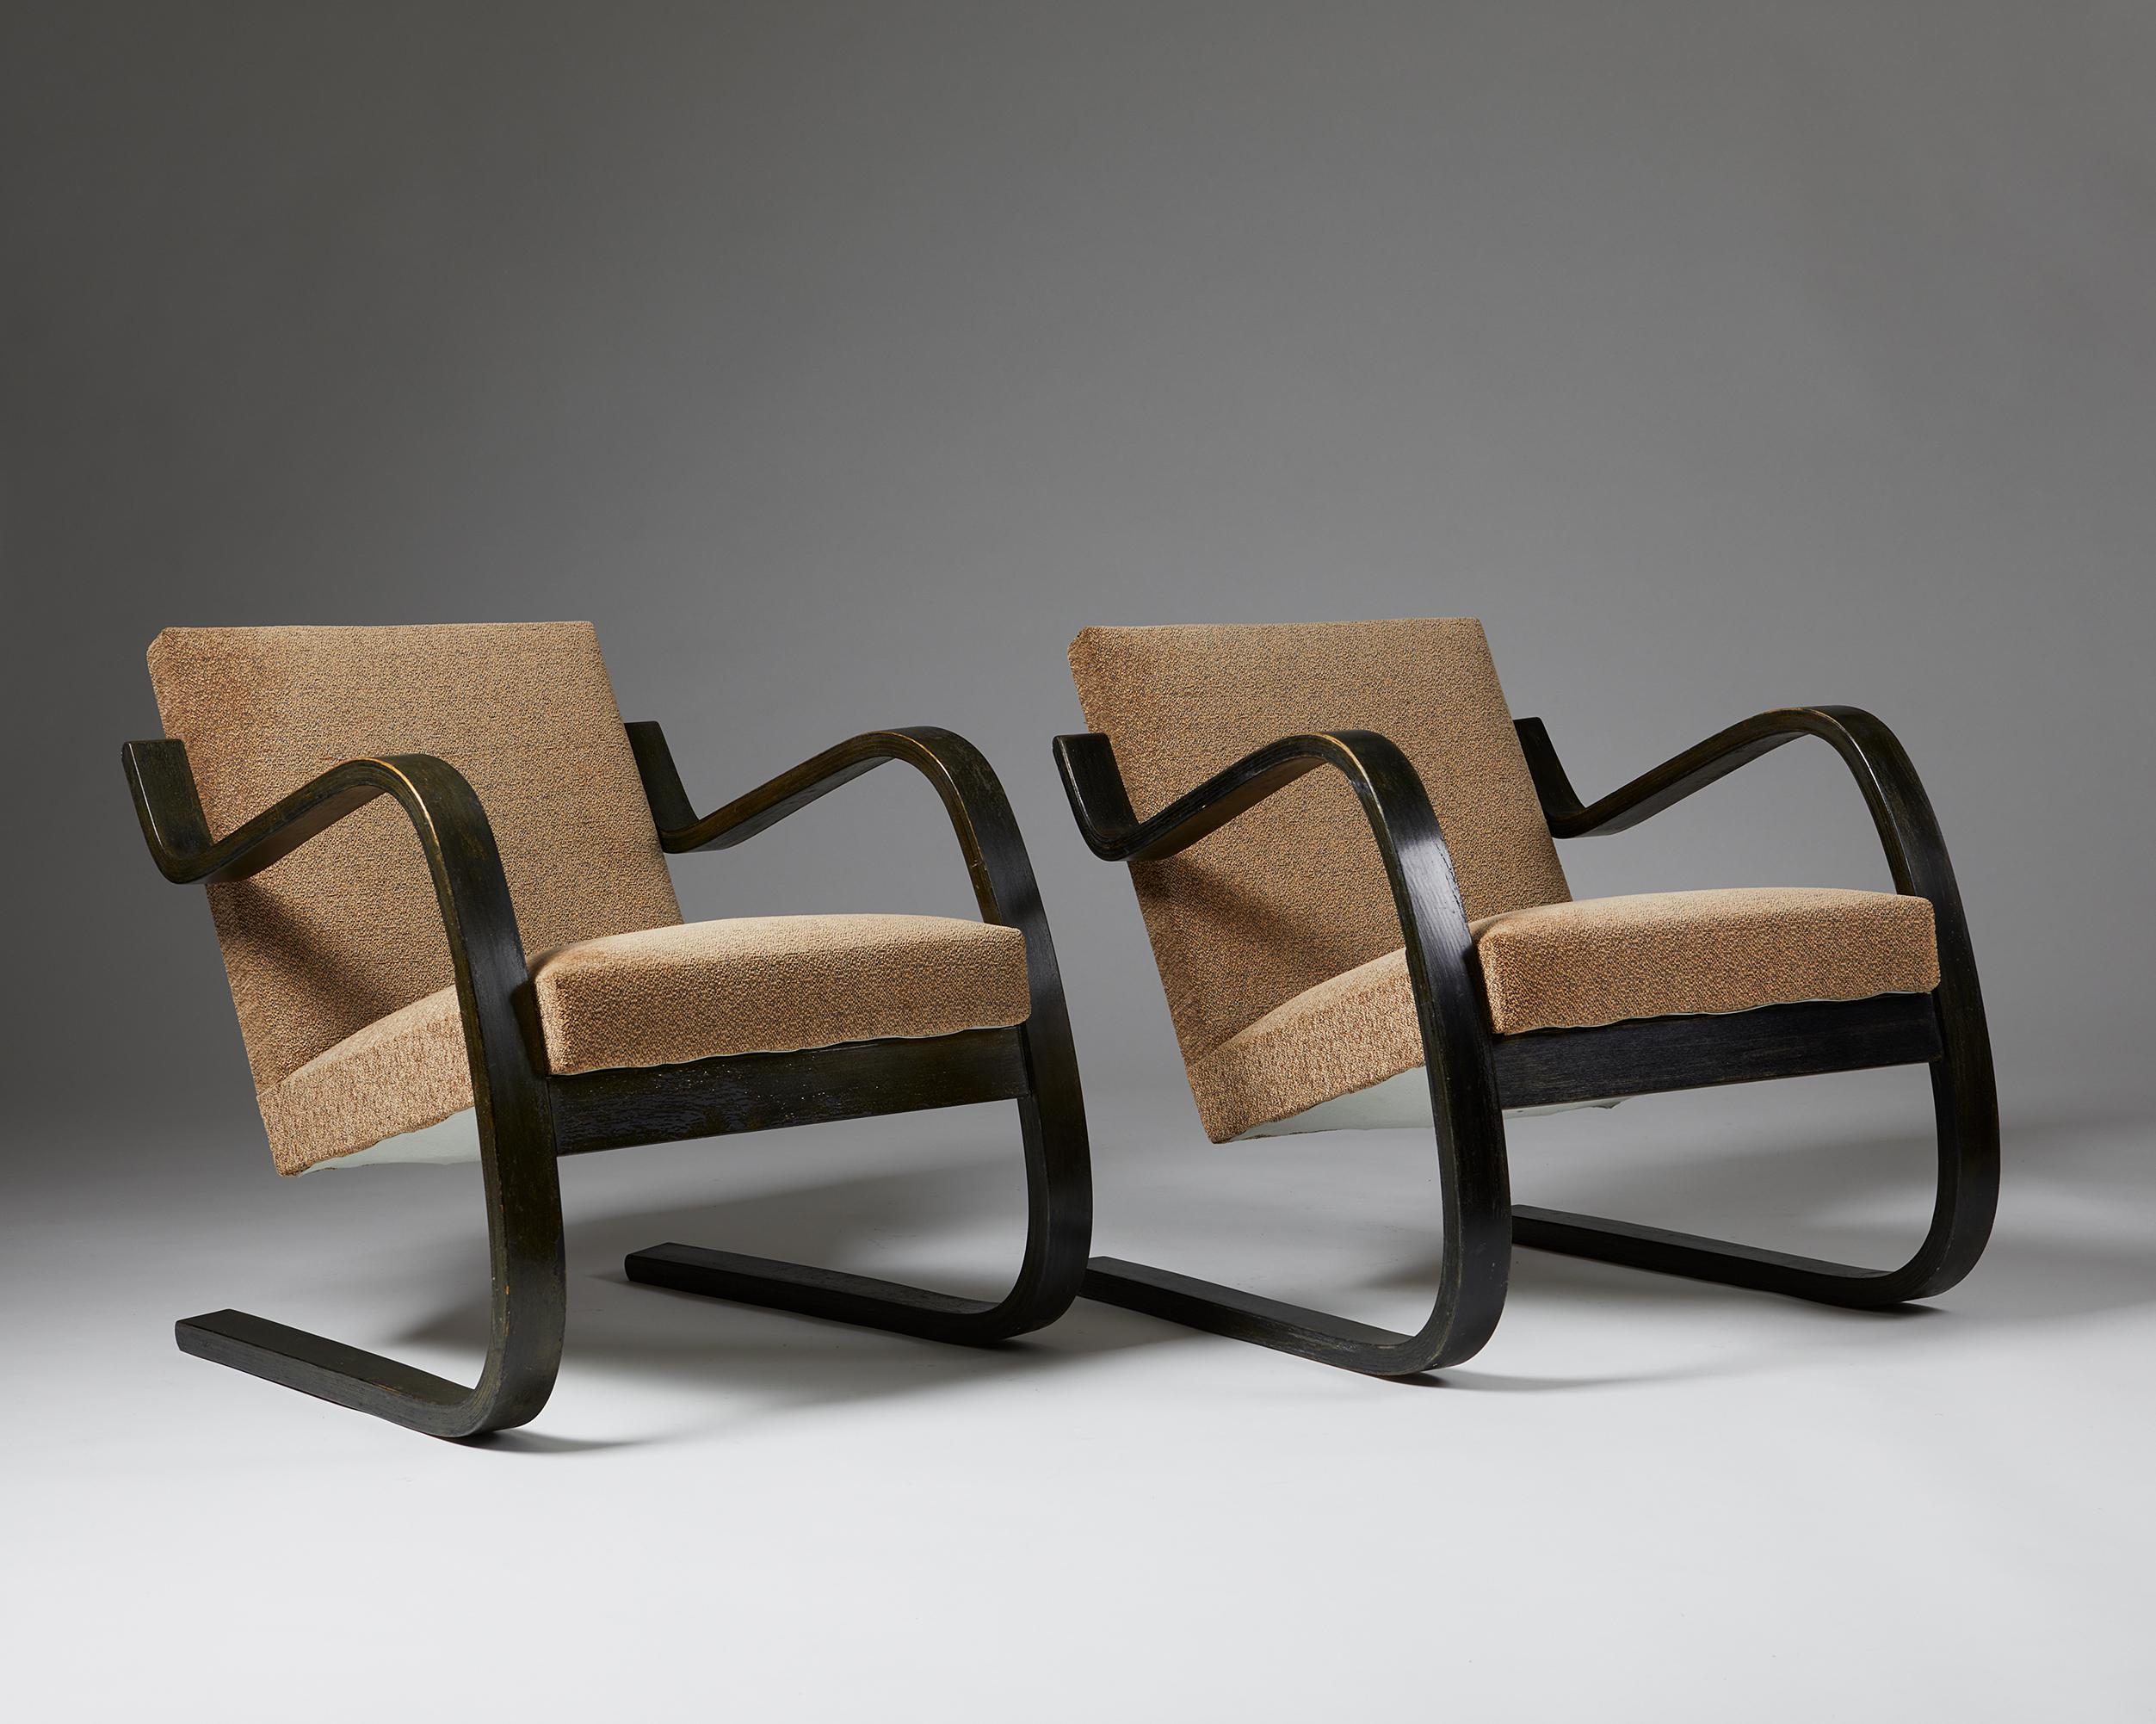 Finnish Pair of Chairs ‘Model 34’ Designed by Alvar Aalto for Artek, Finland, 1930's